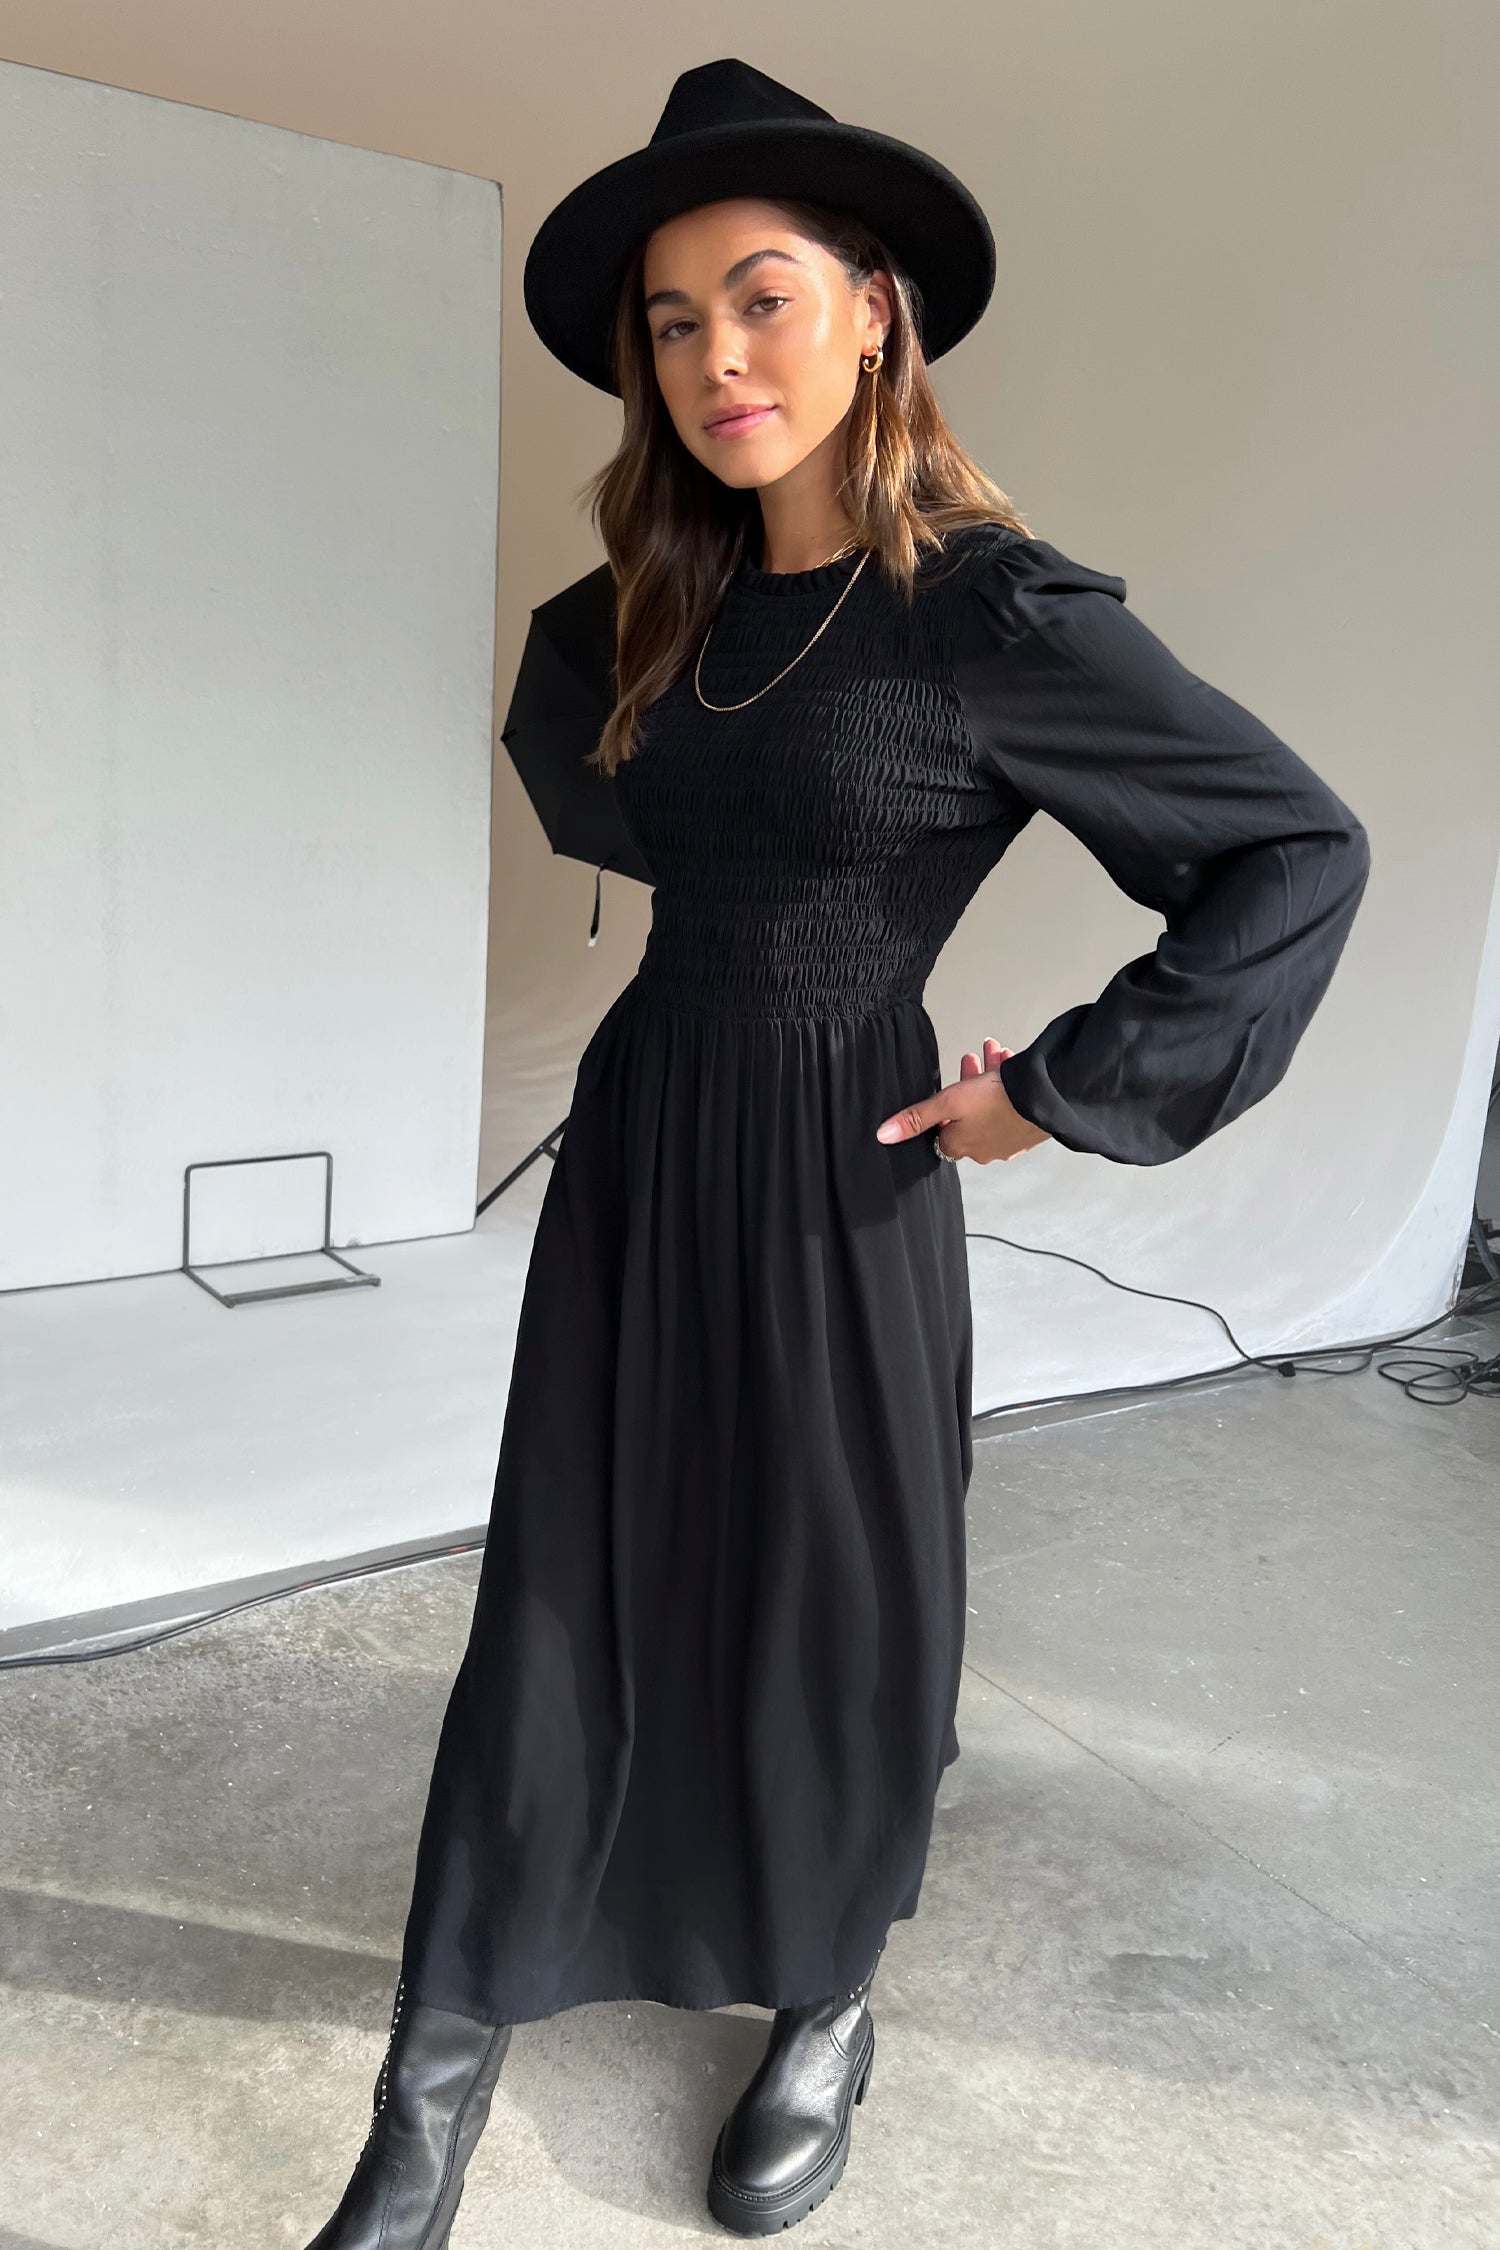 Model wearing Black Swedish Dress standing facing the camera